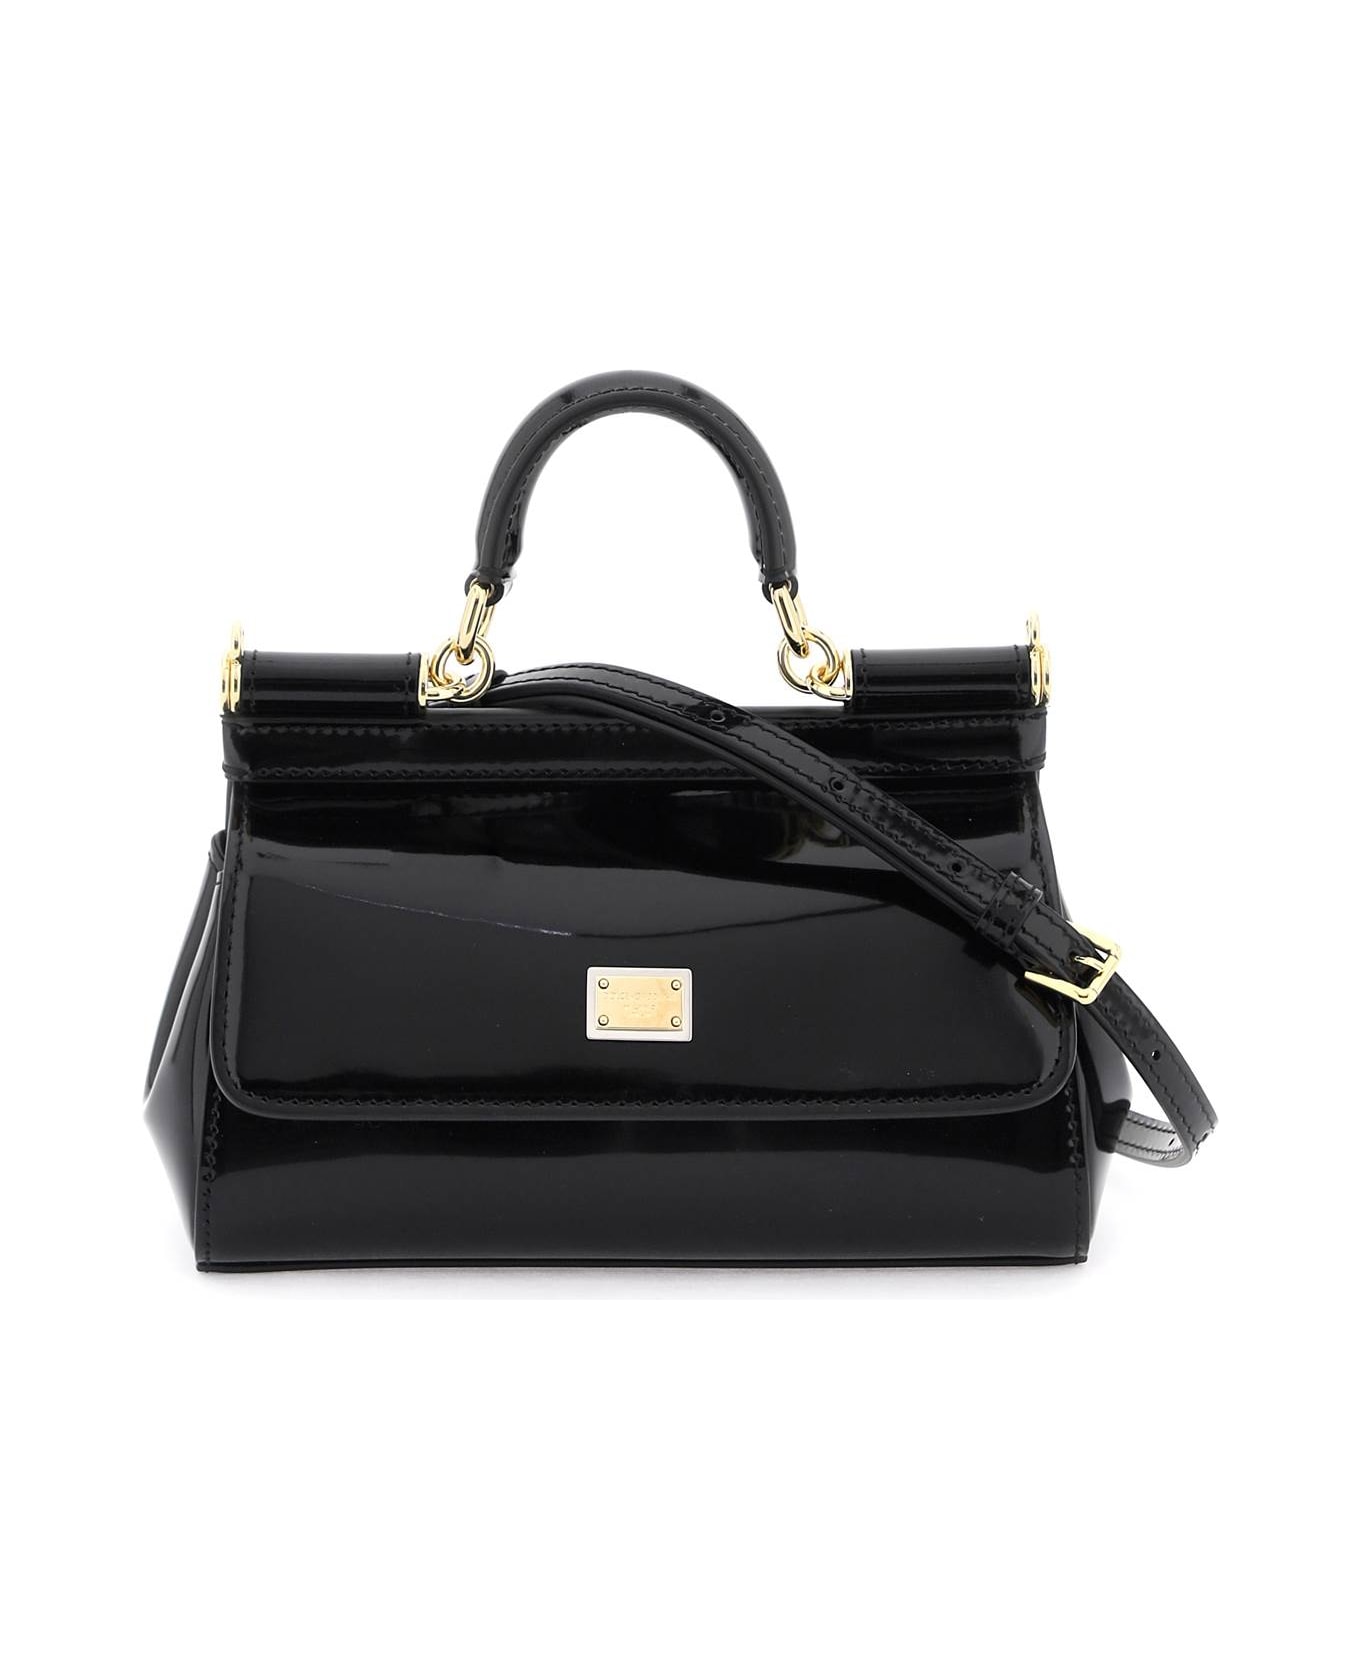 Dolce & Gabbana Sicily Handbag - Nero トートバッグ